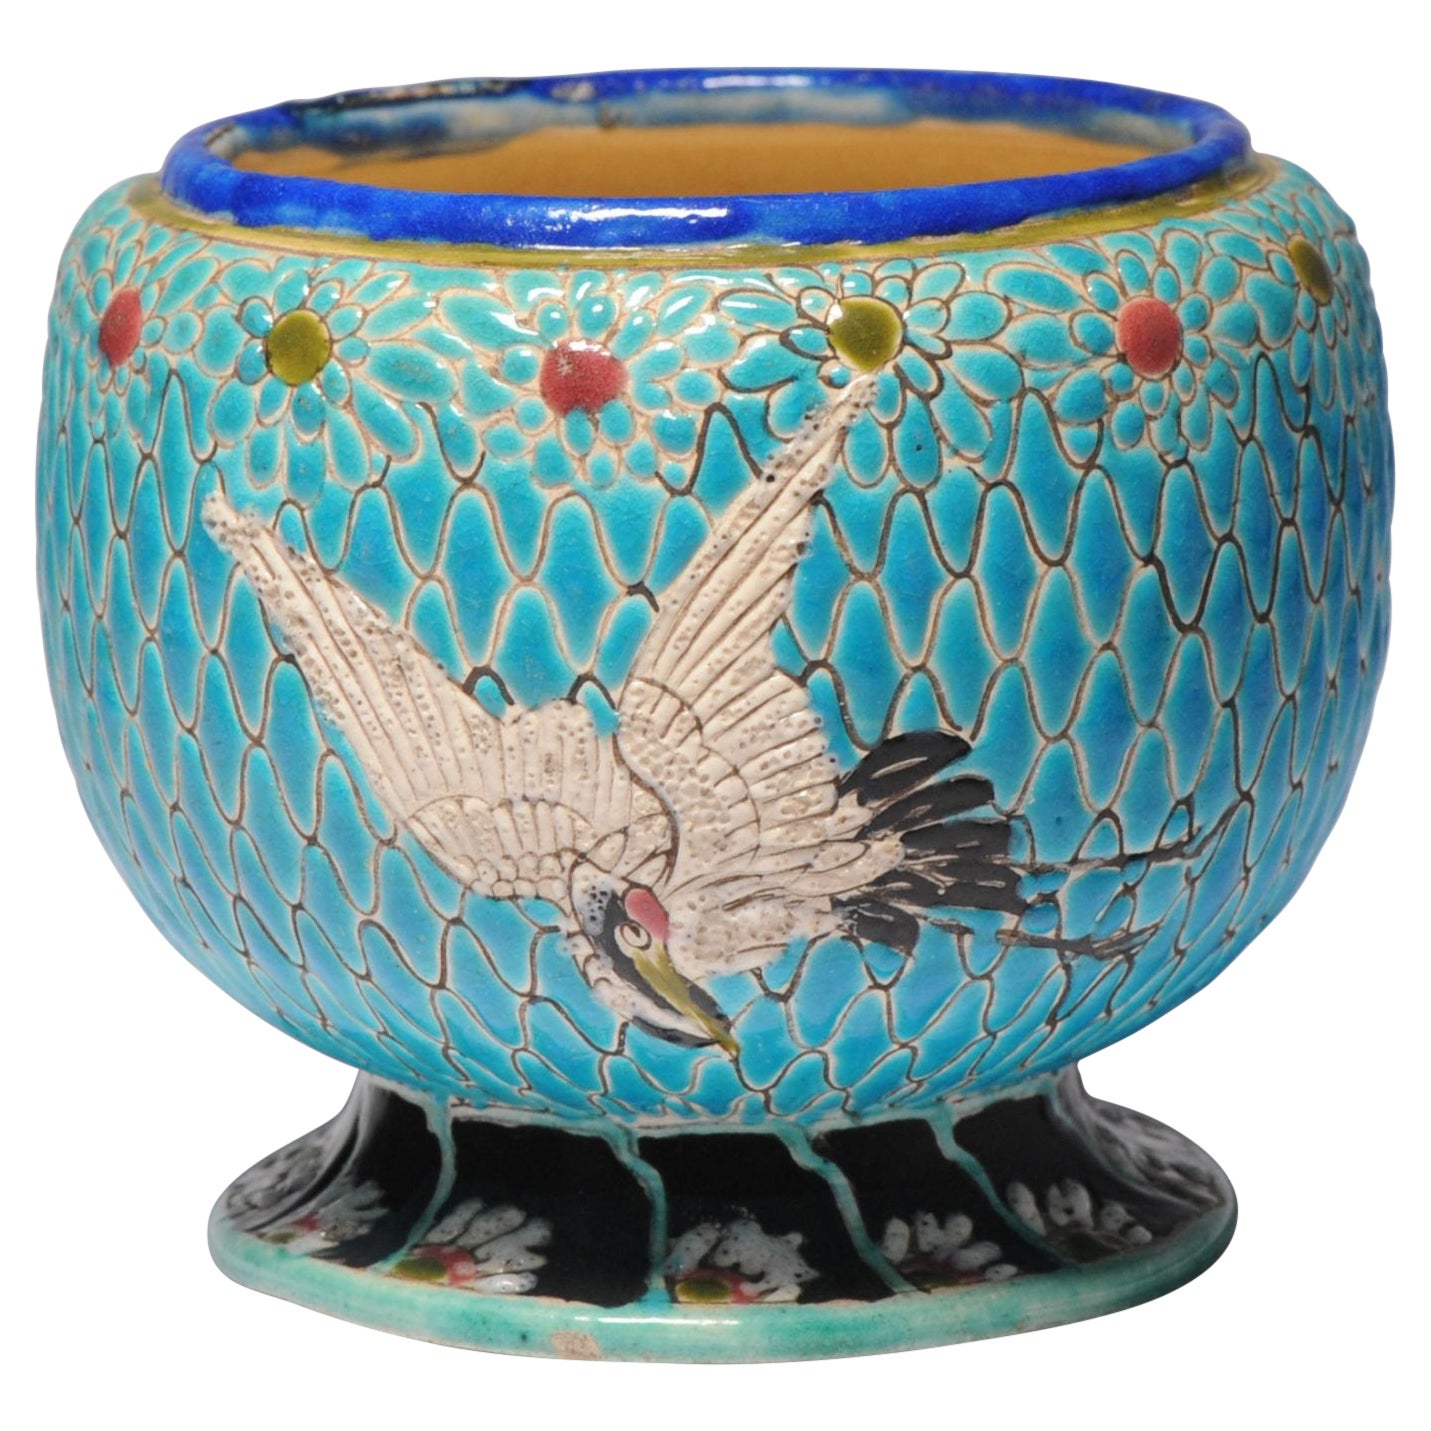 Pot à eau japonais turqoise Satsuma du 19e siècle ou base marquée Koro